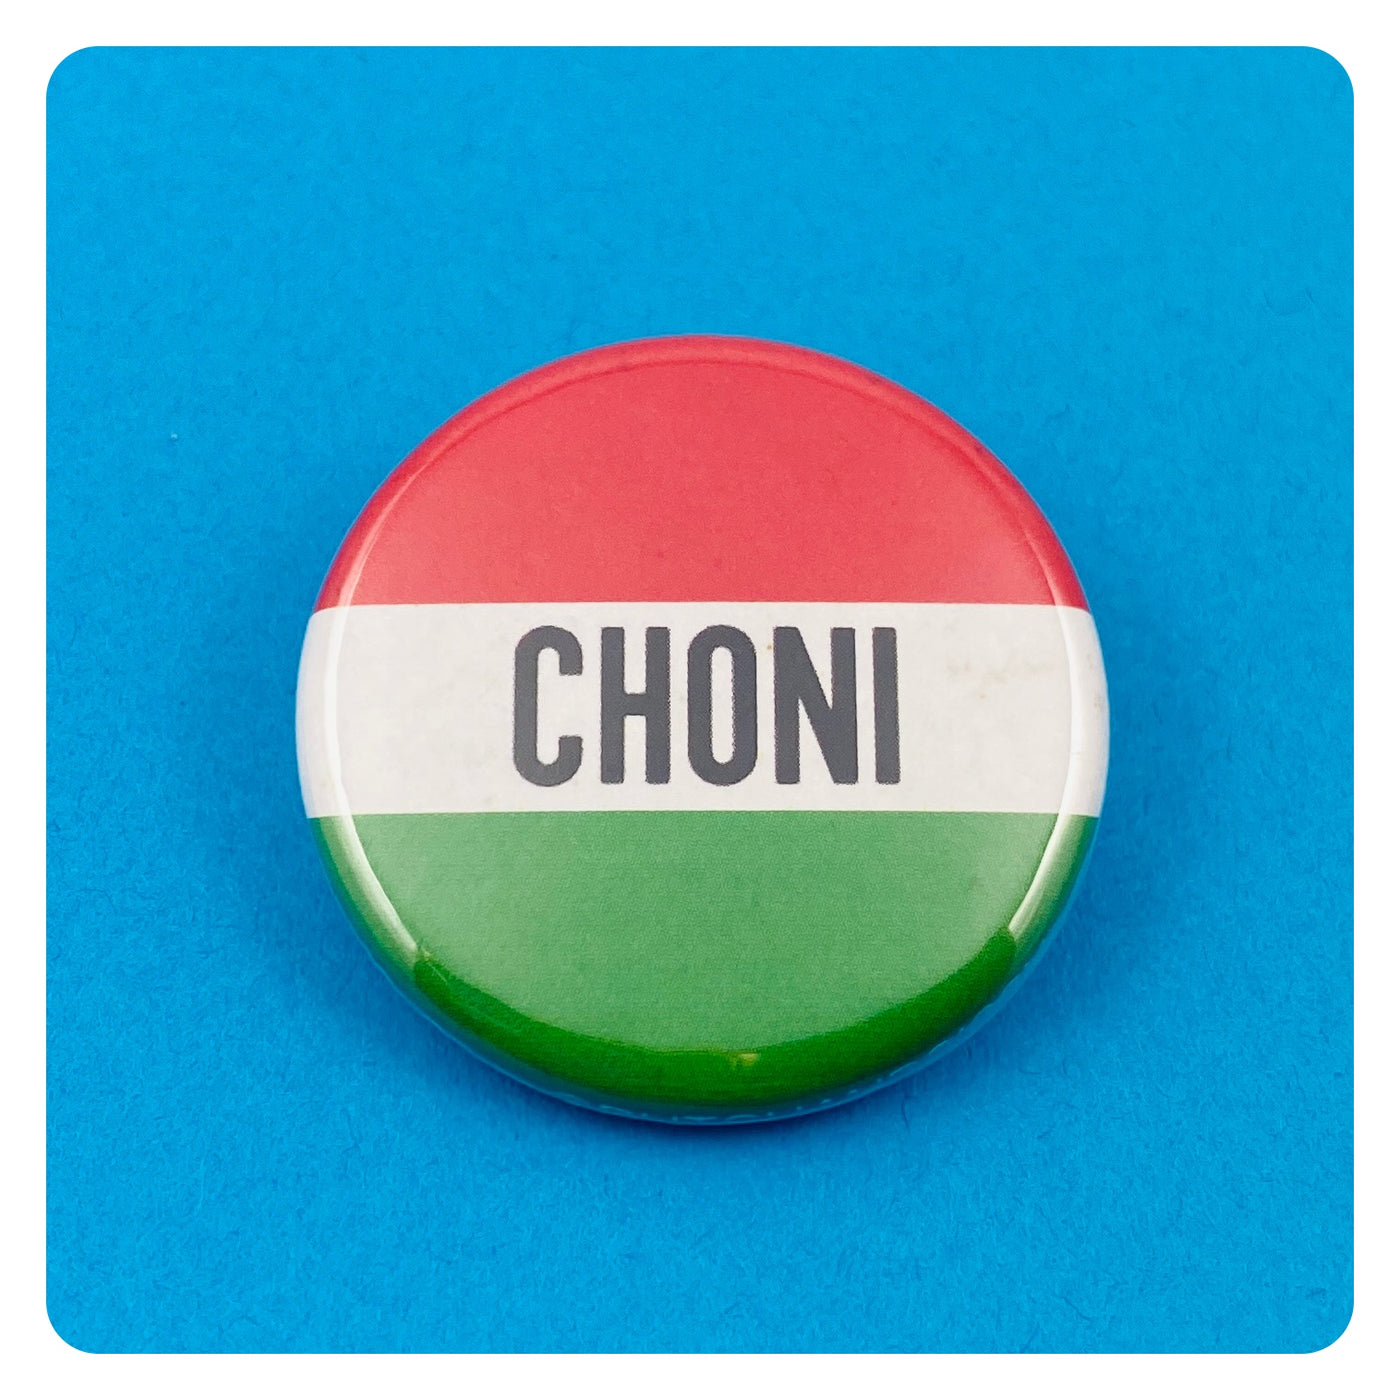 Choni Ship Button